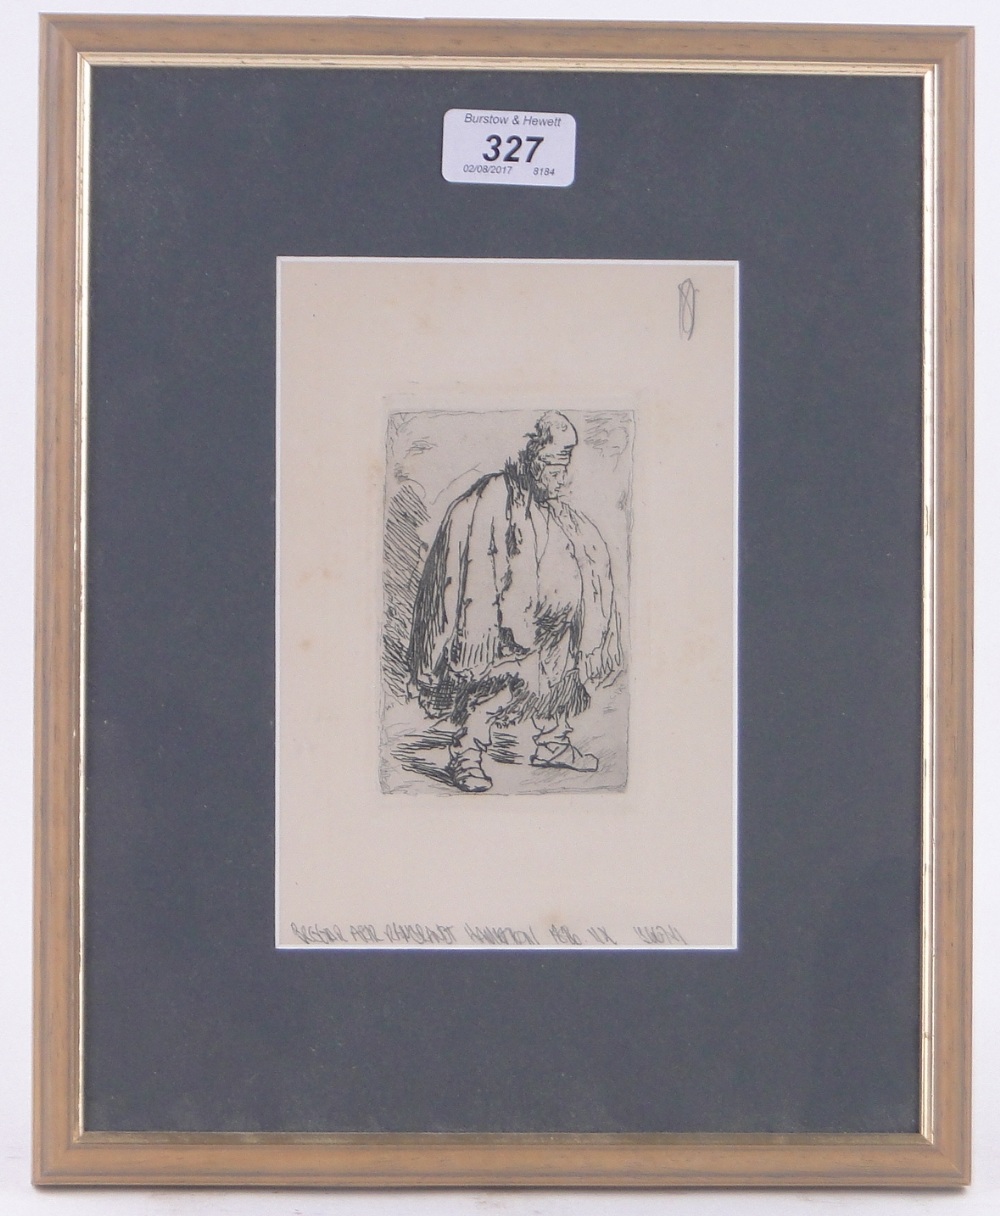 After Rembrandt, etching, a beggar published 1880, plate size 4.5" x 3", framed. - Image 2 of 4